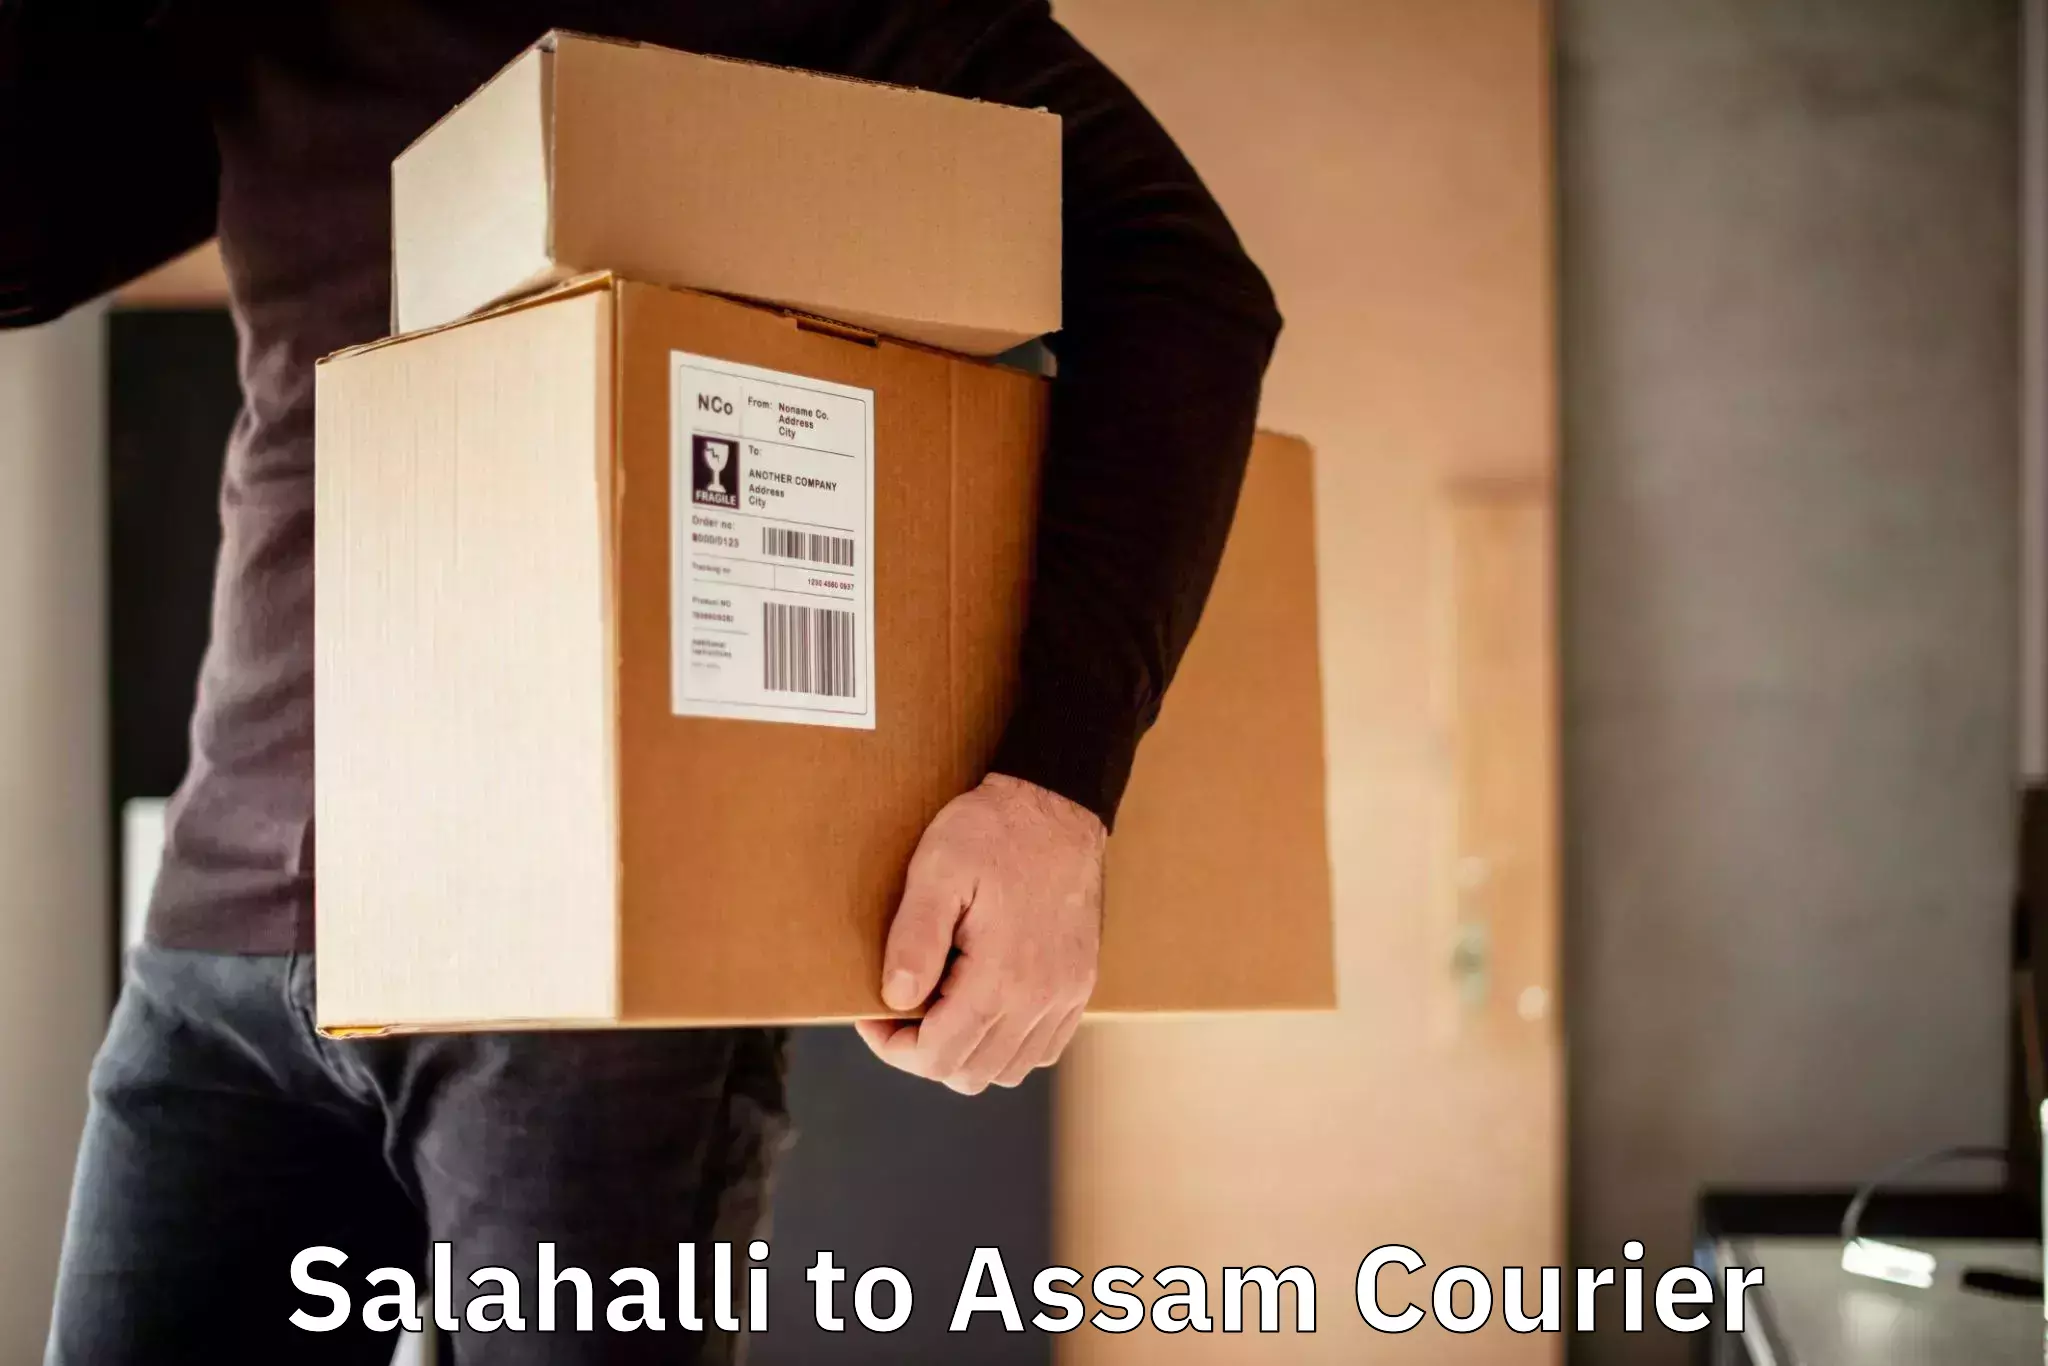 Secure package delivery Salahalli to Guwahati